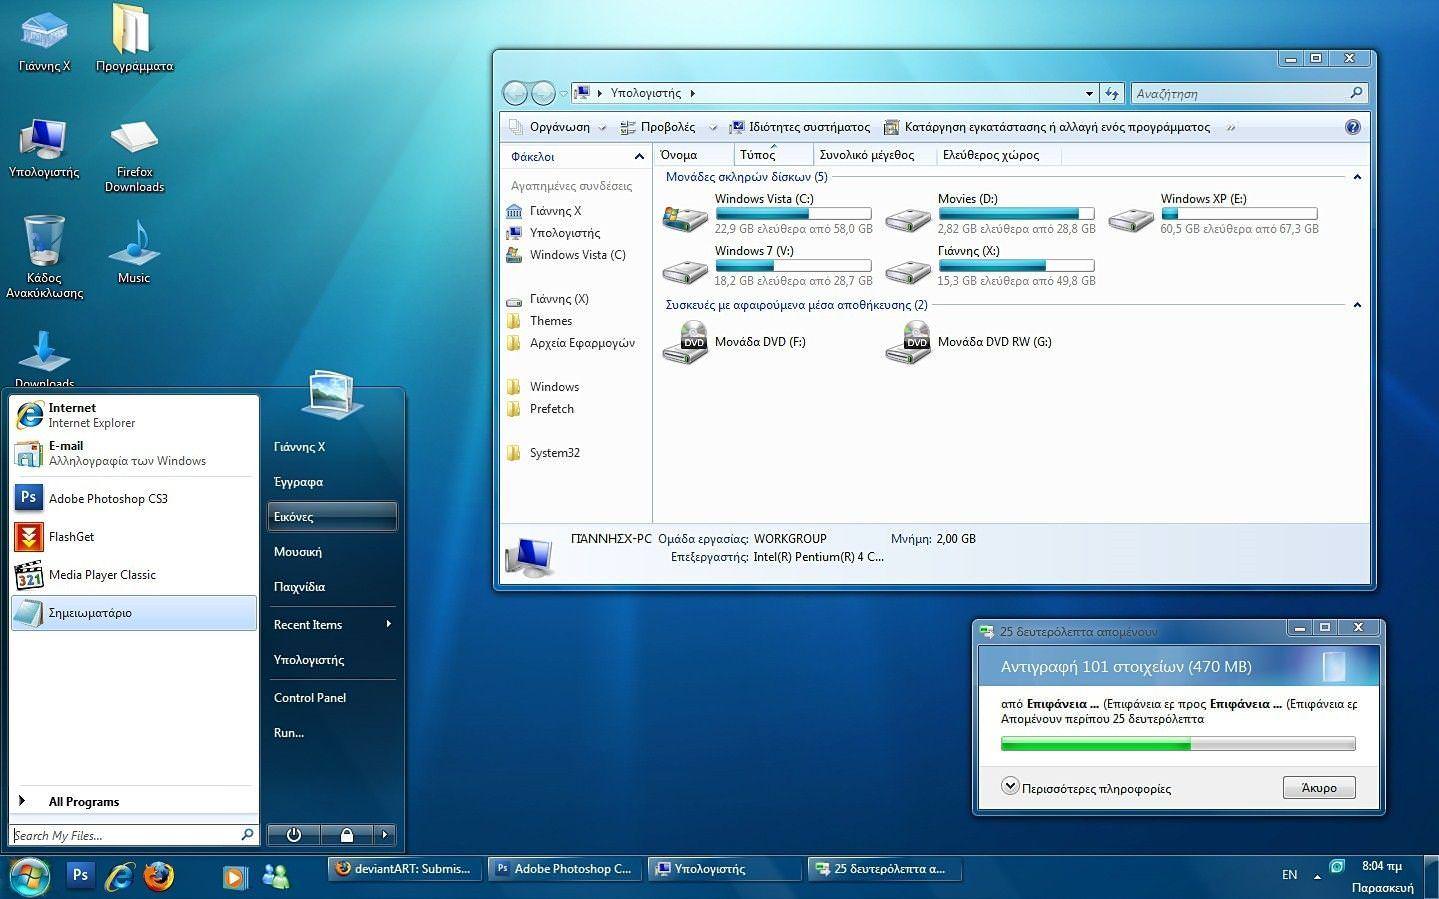 windows 7 sp1 32 bit download